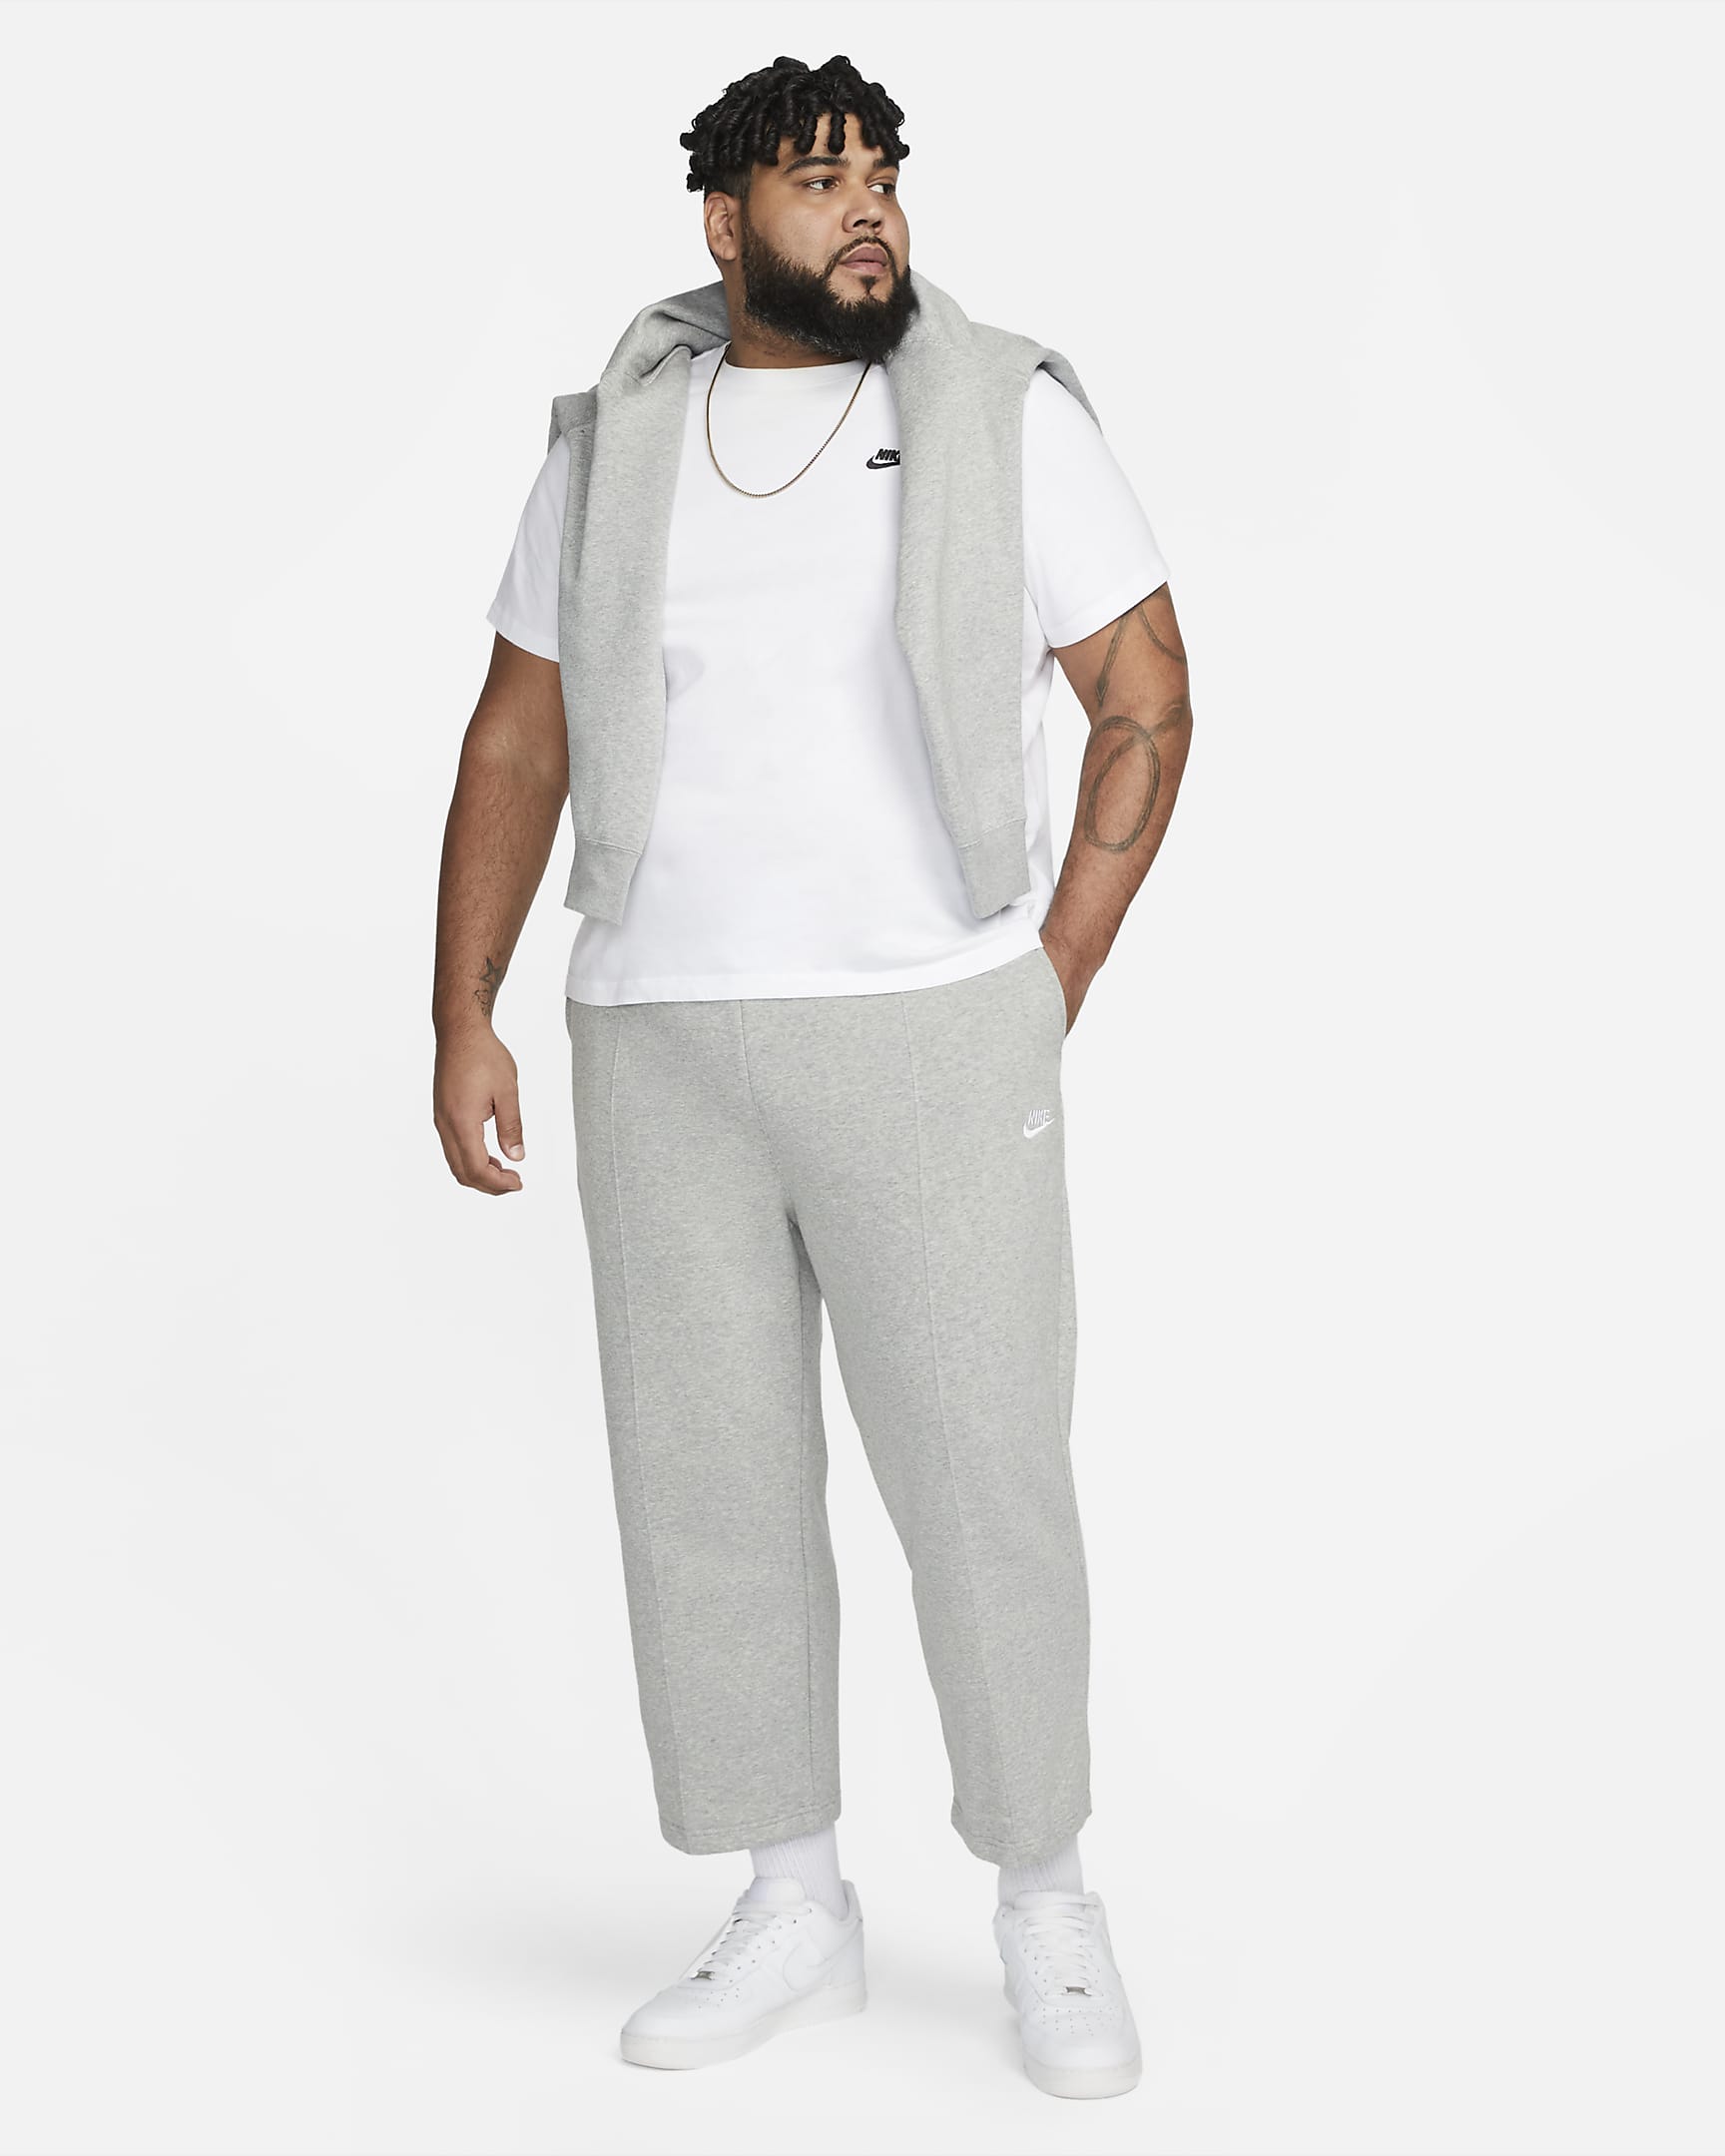 Nike Club Fleece Men's Cropped Pants - Dark Grey Heather/White